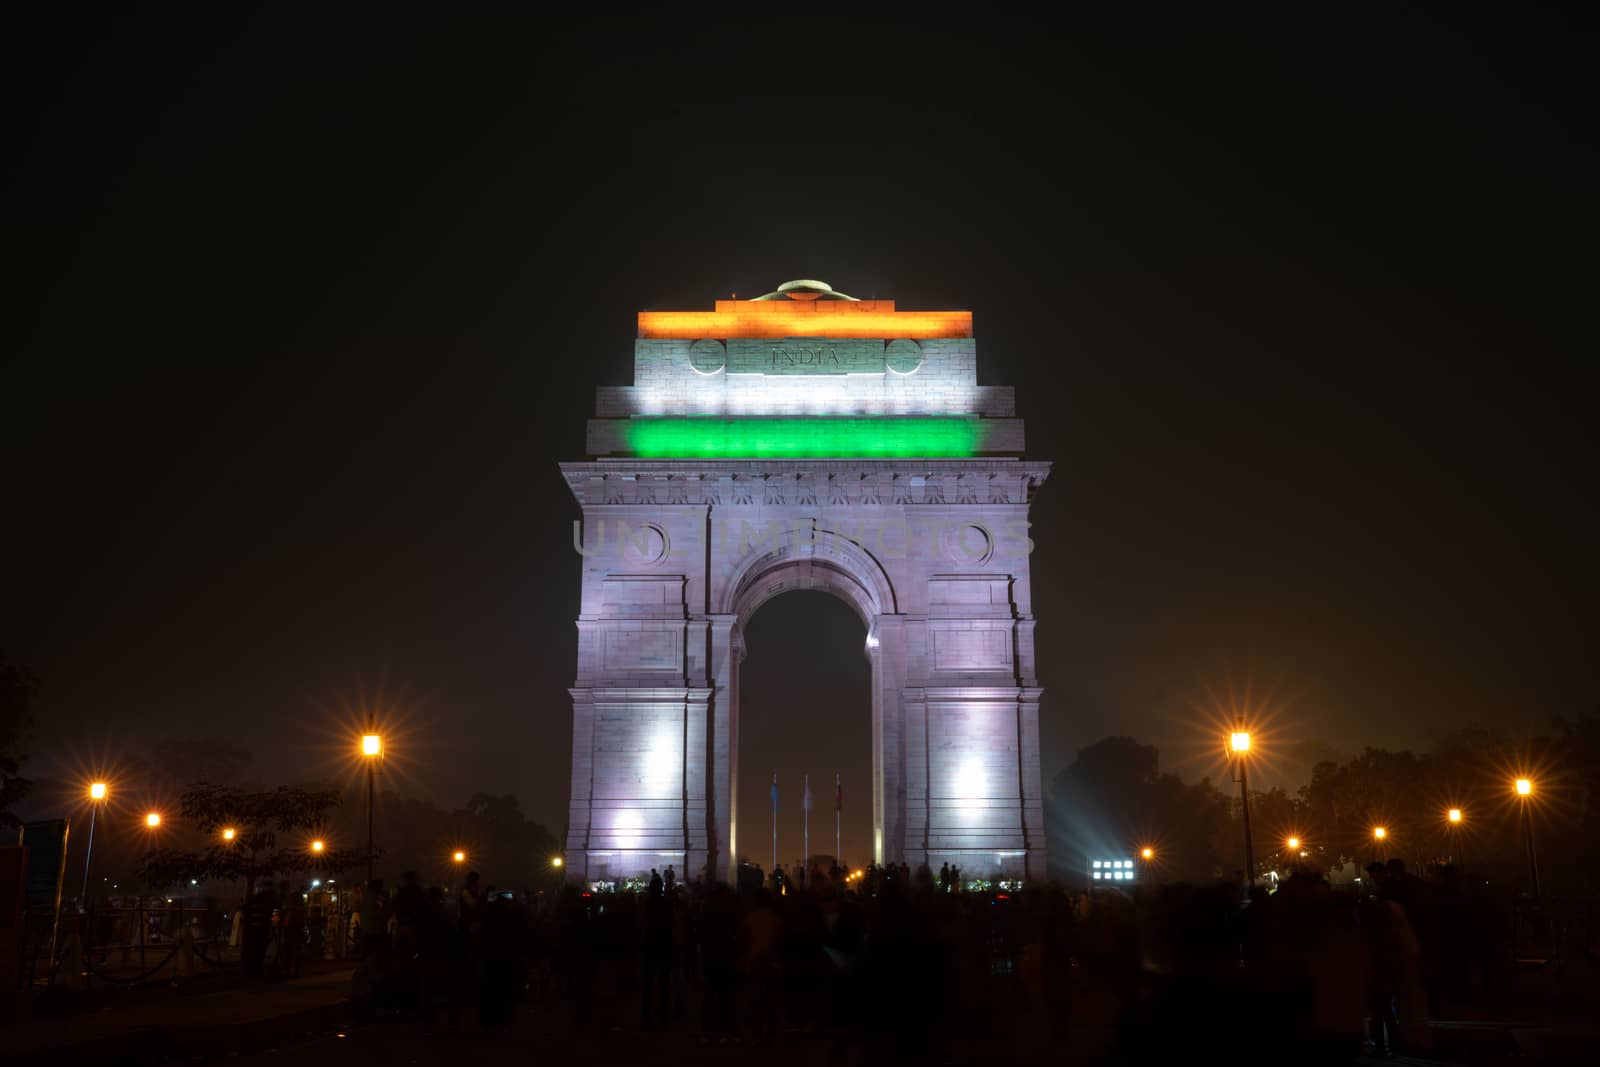 New Delhi, India - December 13, 2019: The illuminated India Gate at night.